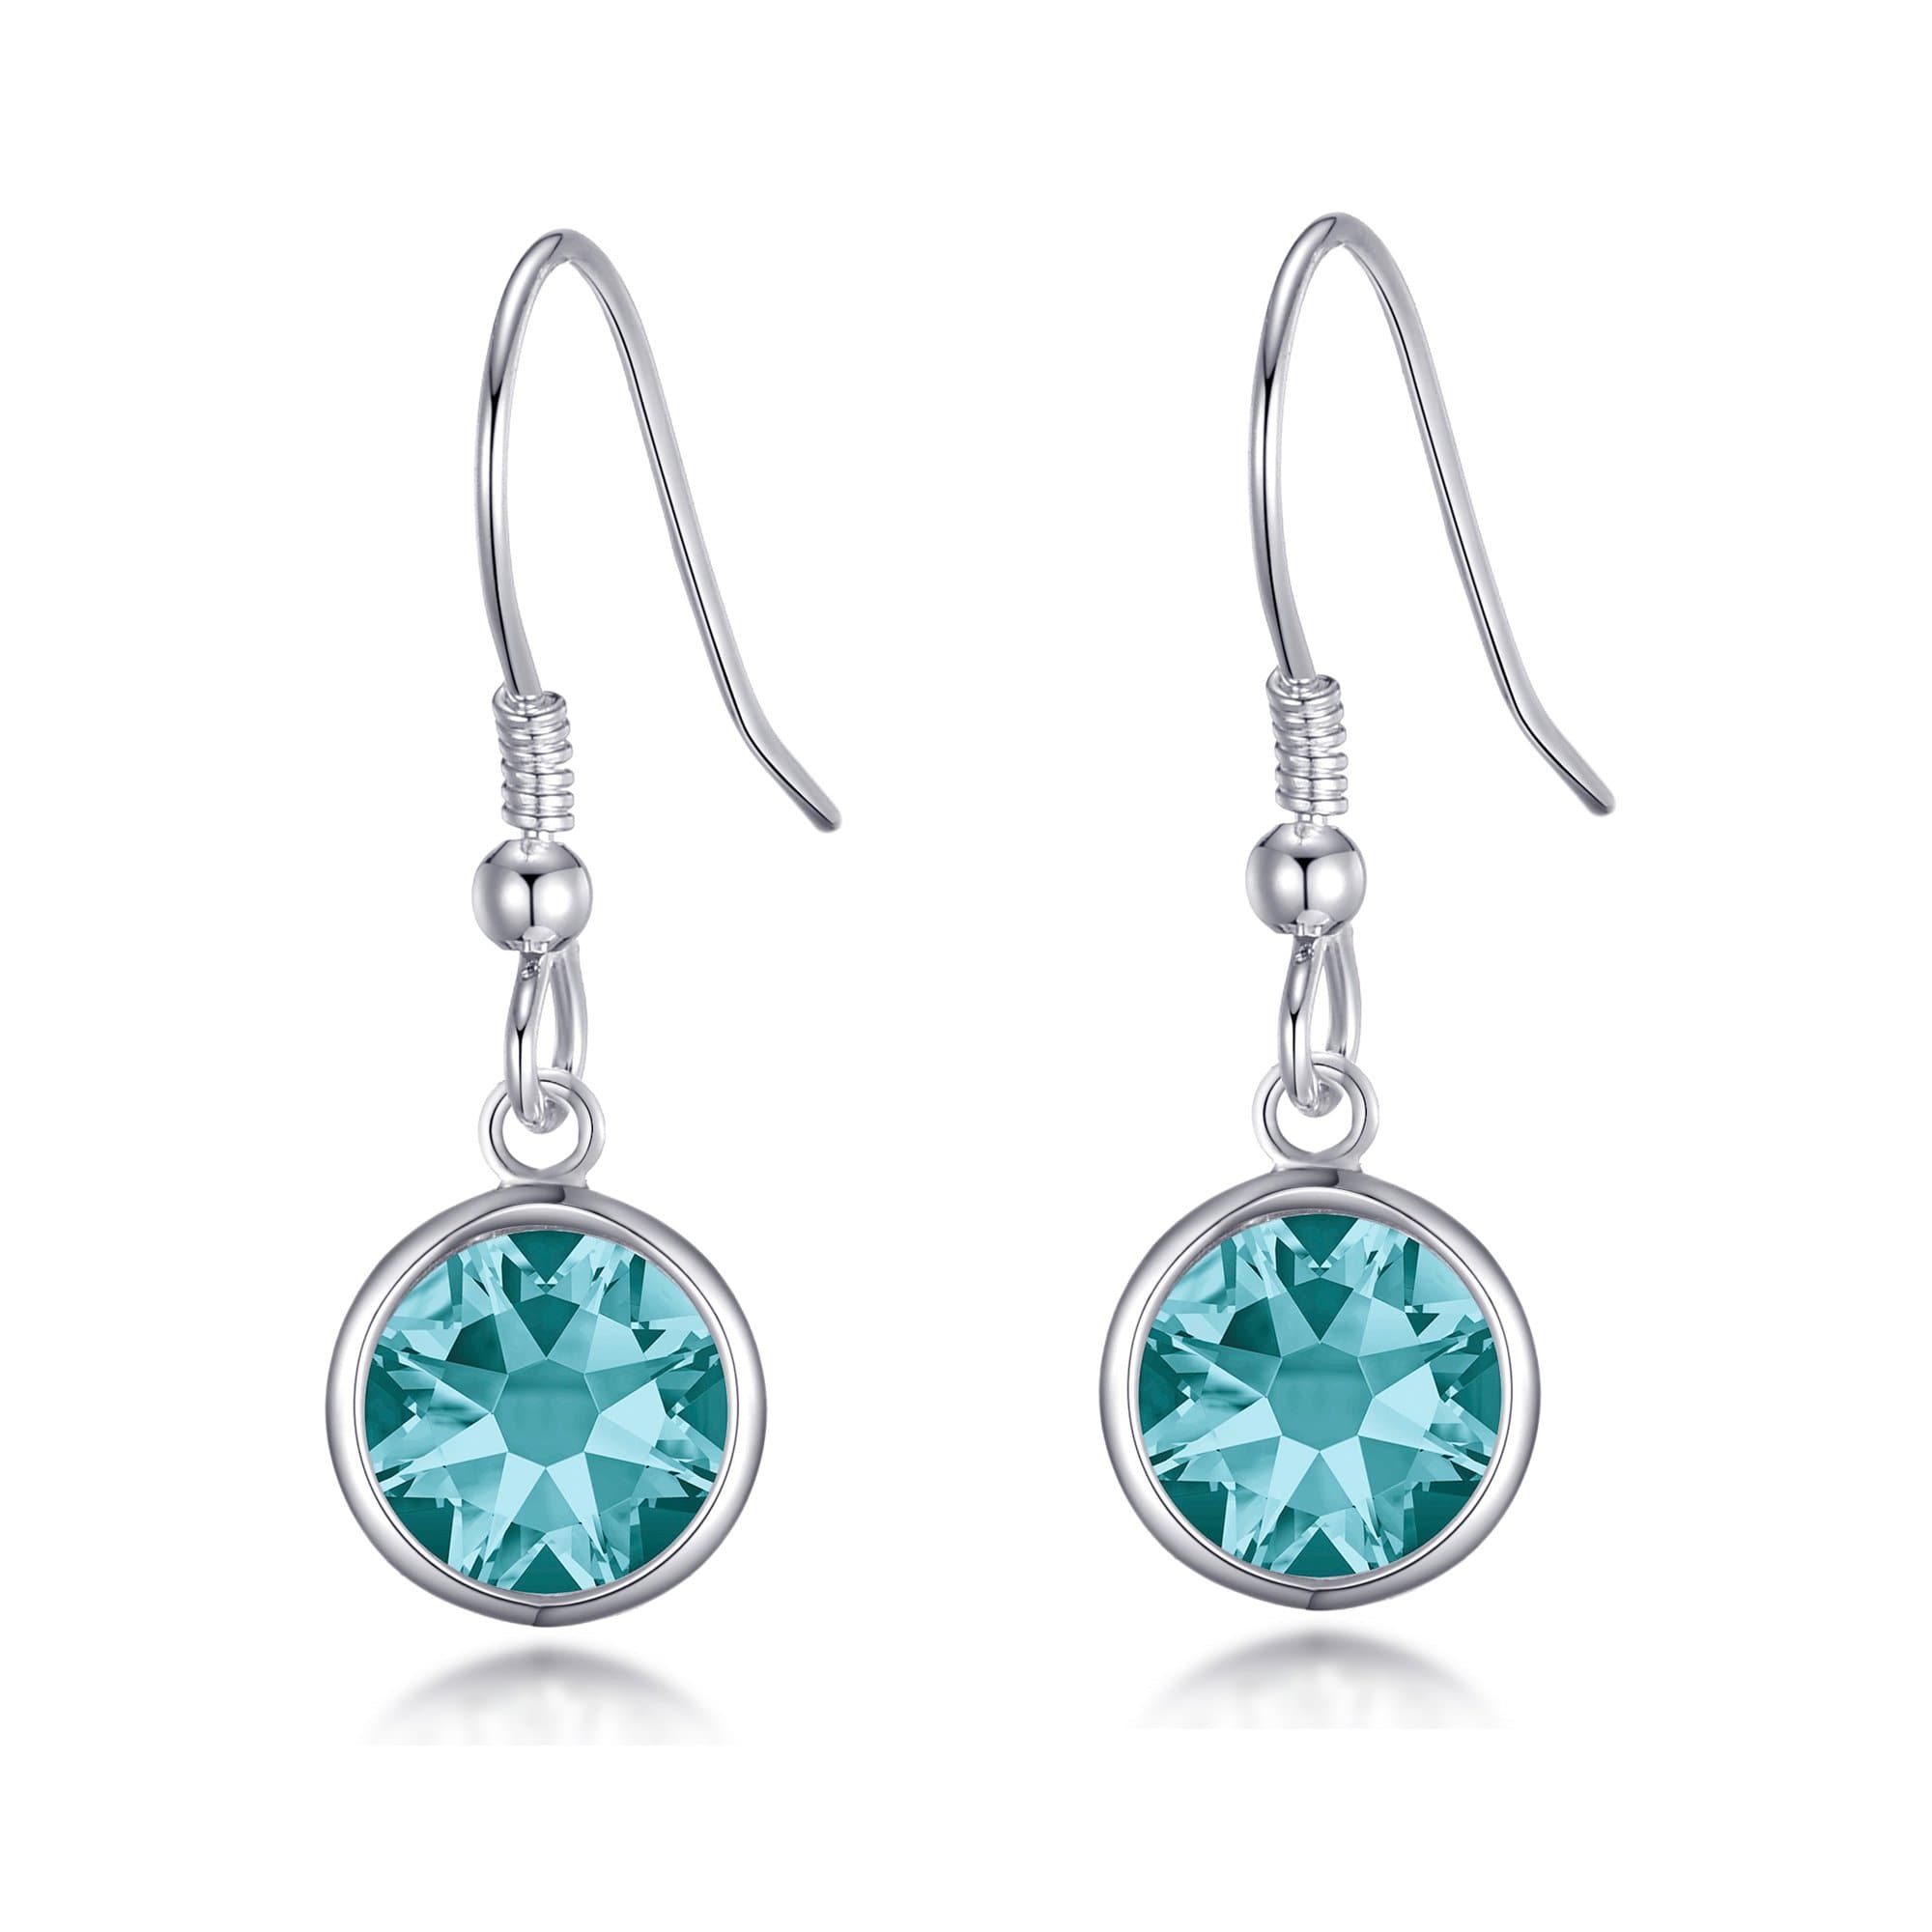 Blue Crystal Drop Earrings Created with Zircondia® Crystals by Philip Jones Jewellery